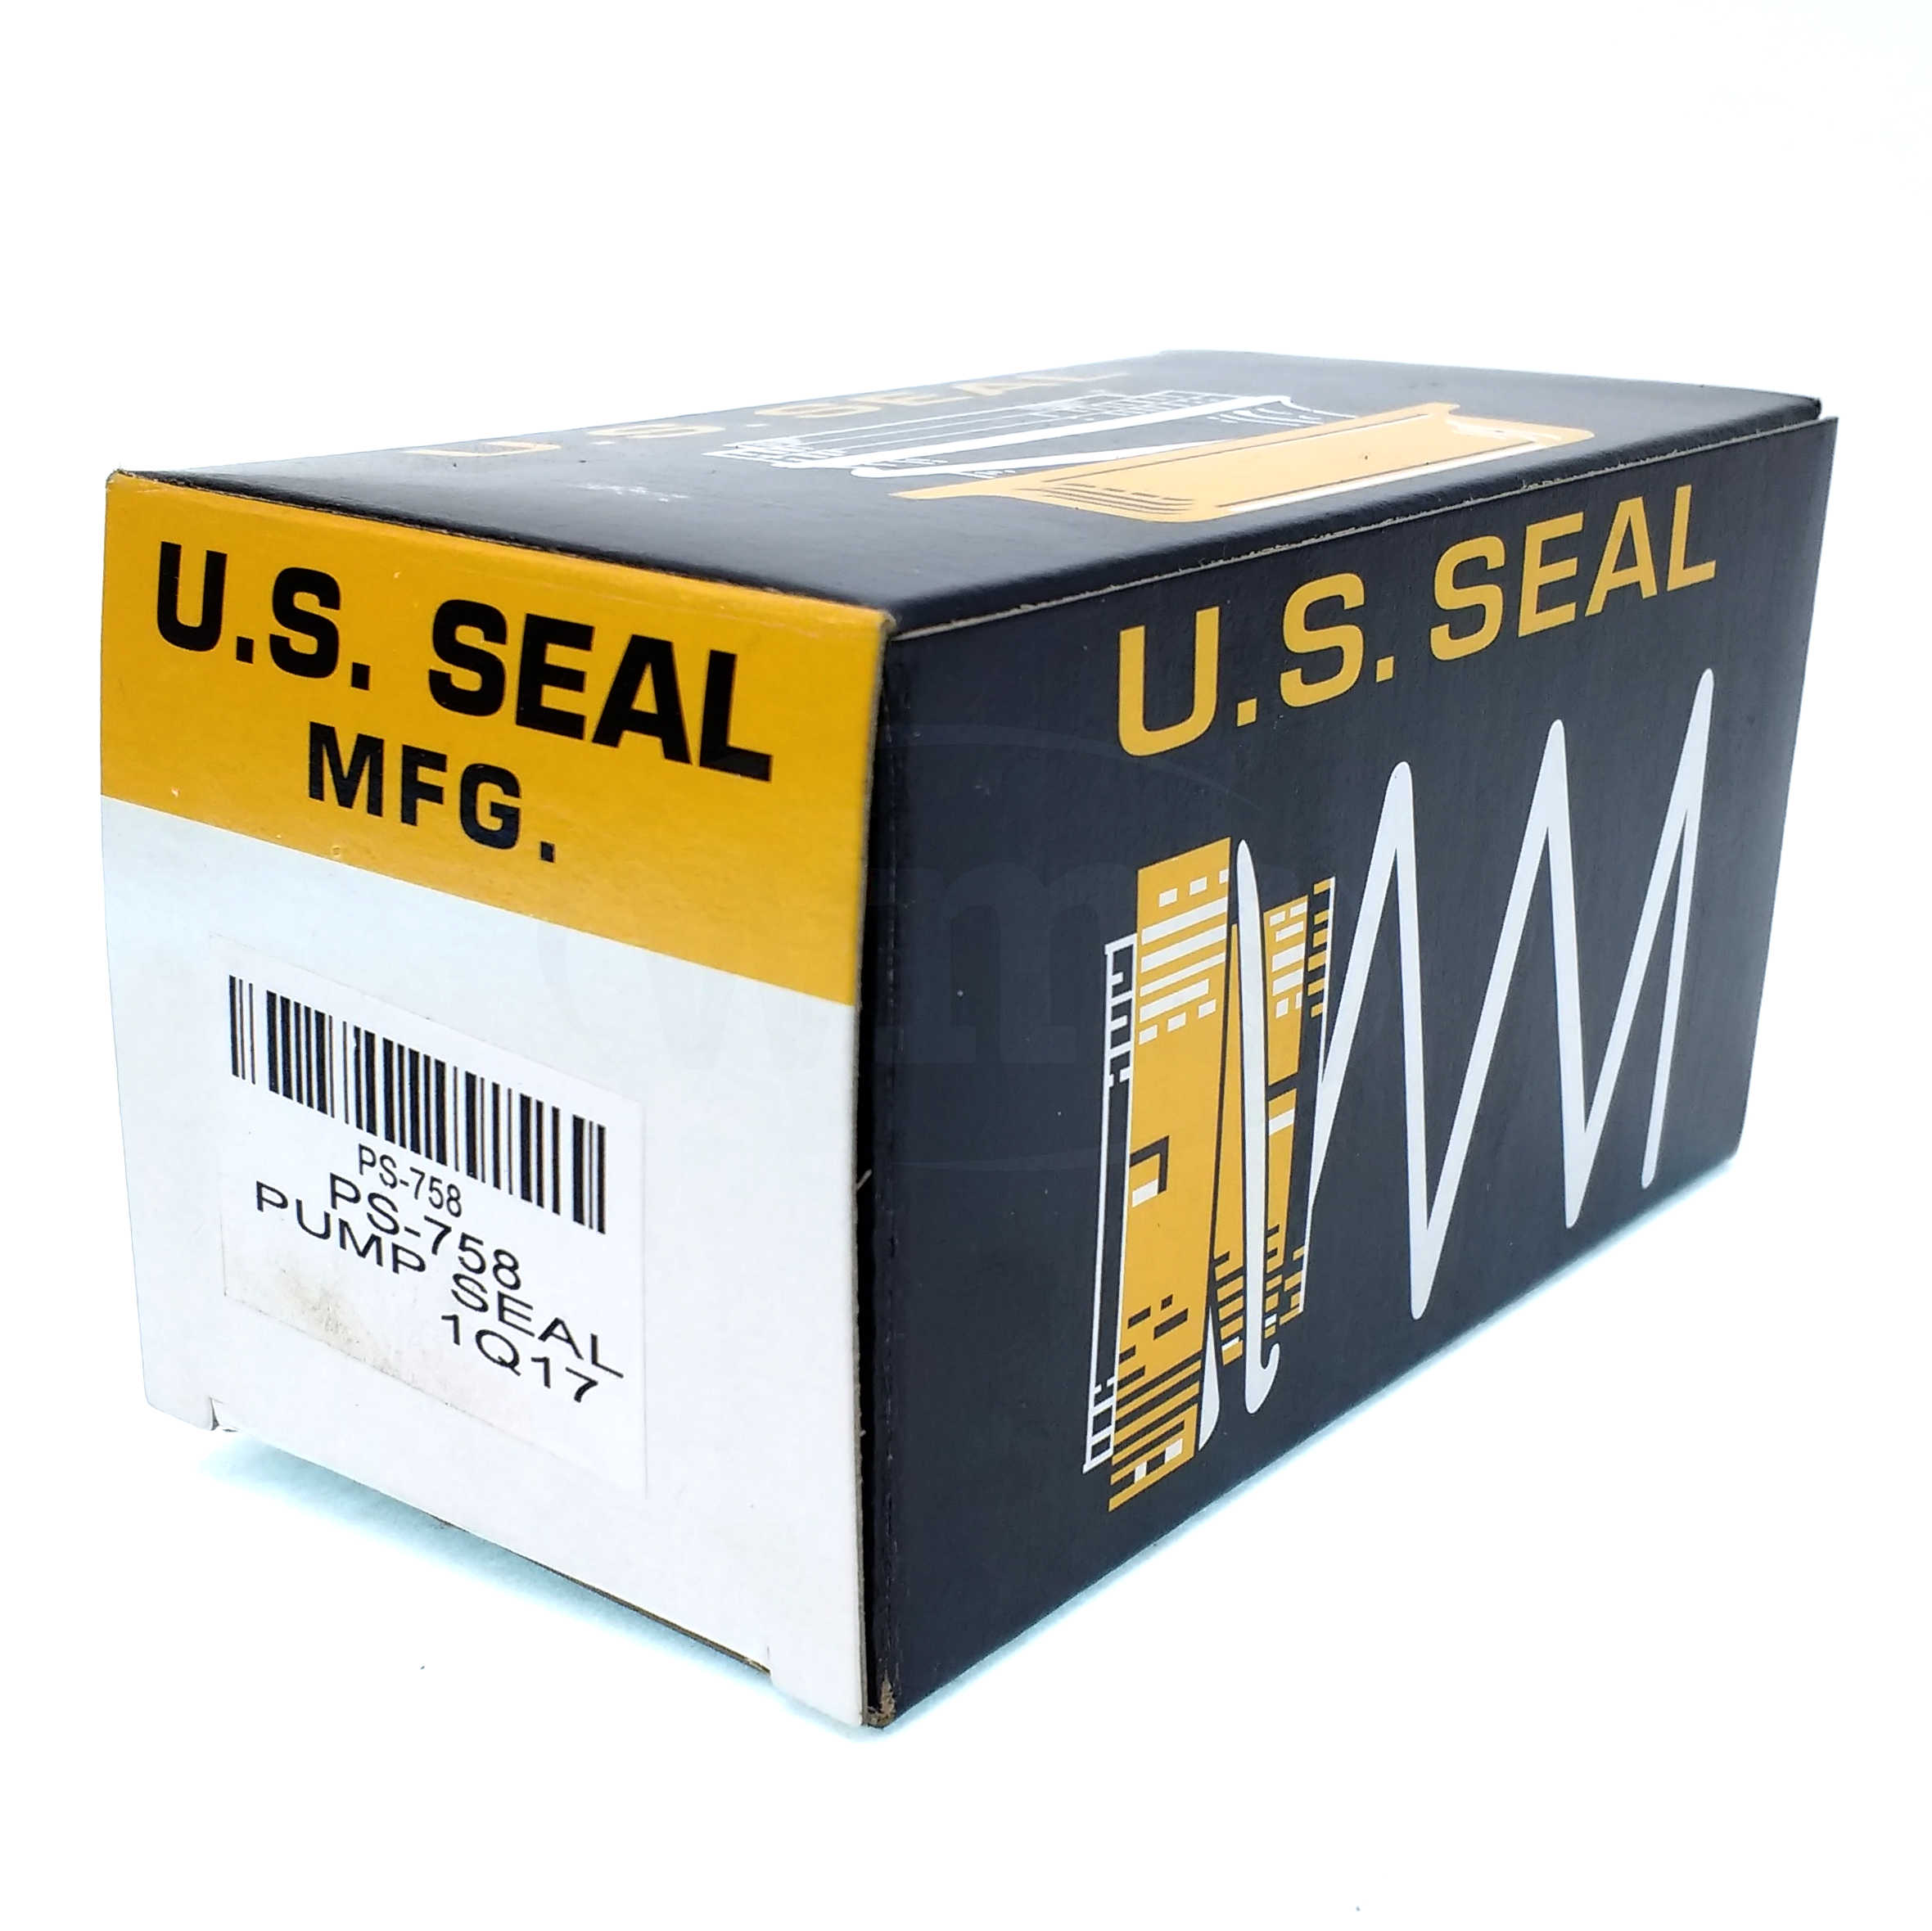 PS-758 U.S. Seal Mfg 1-1/2' Pump Seal 8